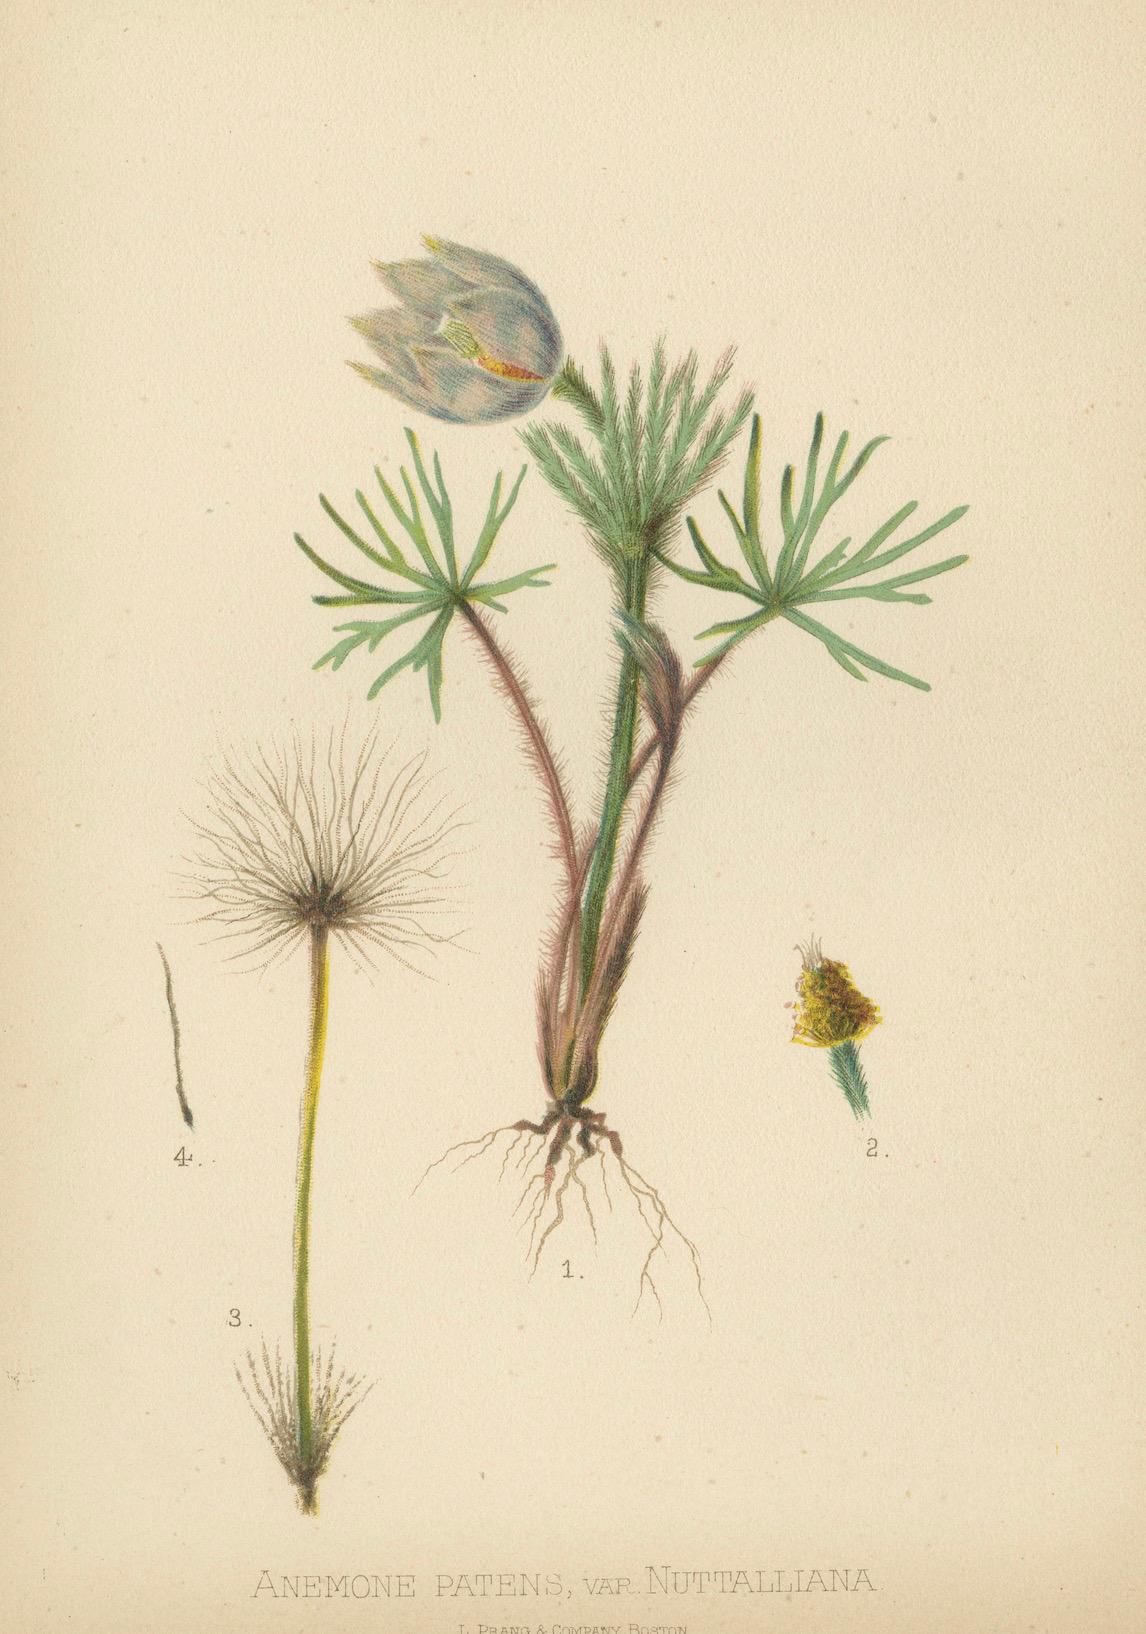 Late 19th Century The Prairie Pasqueflower: Anemone Patens, var. Nuttalliana, 1879